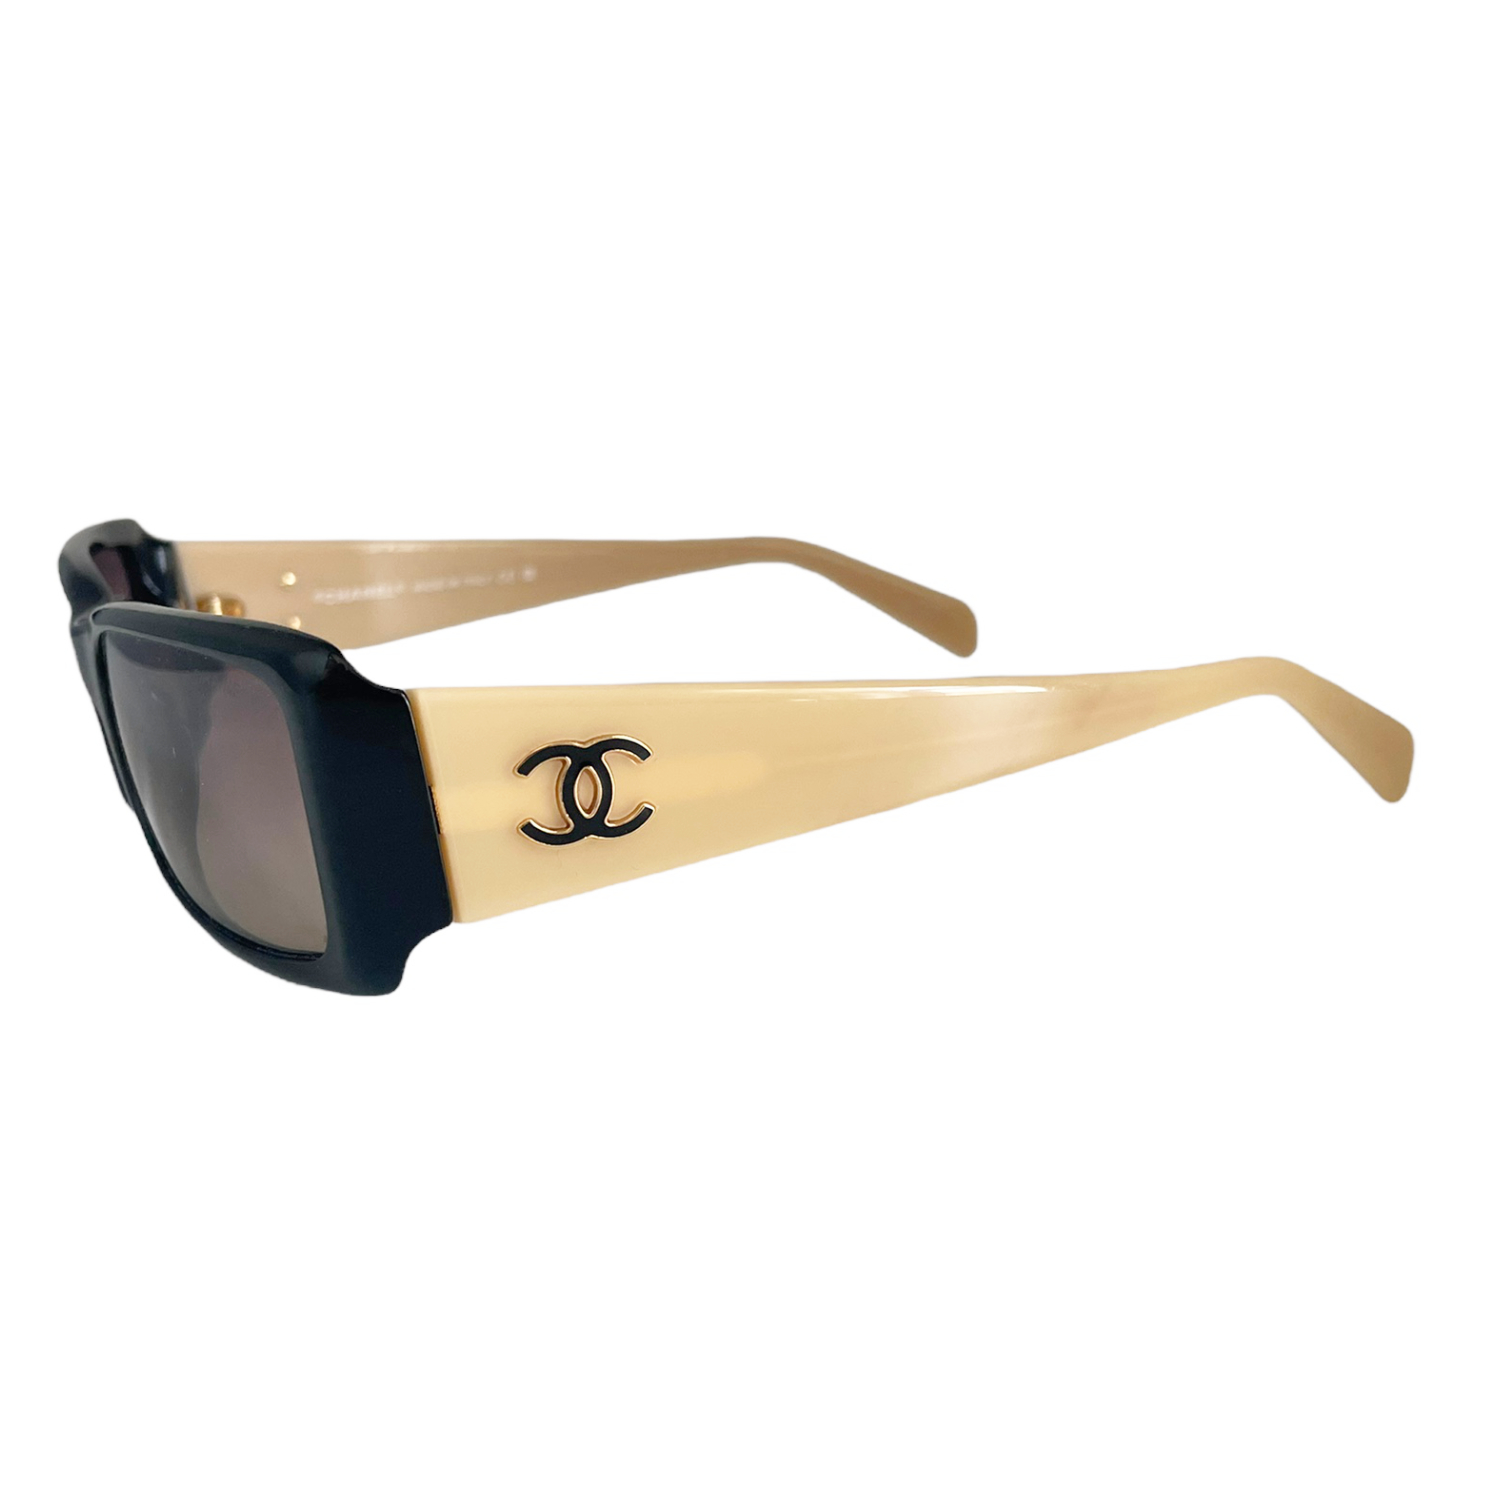 Chanel Chunky Logo Sunglasses in Beige / Black